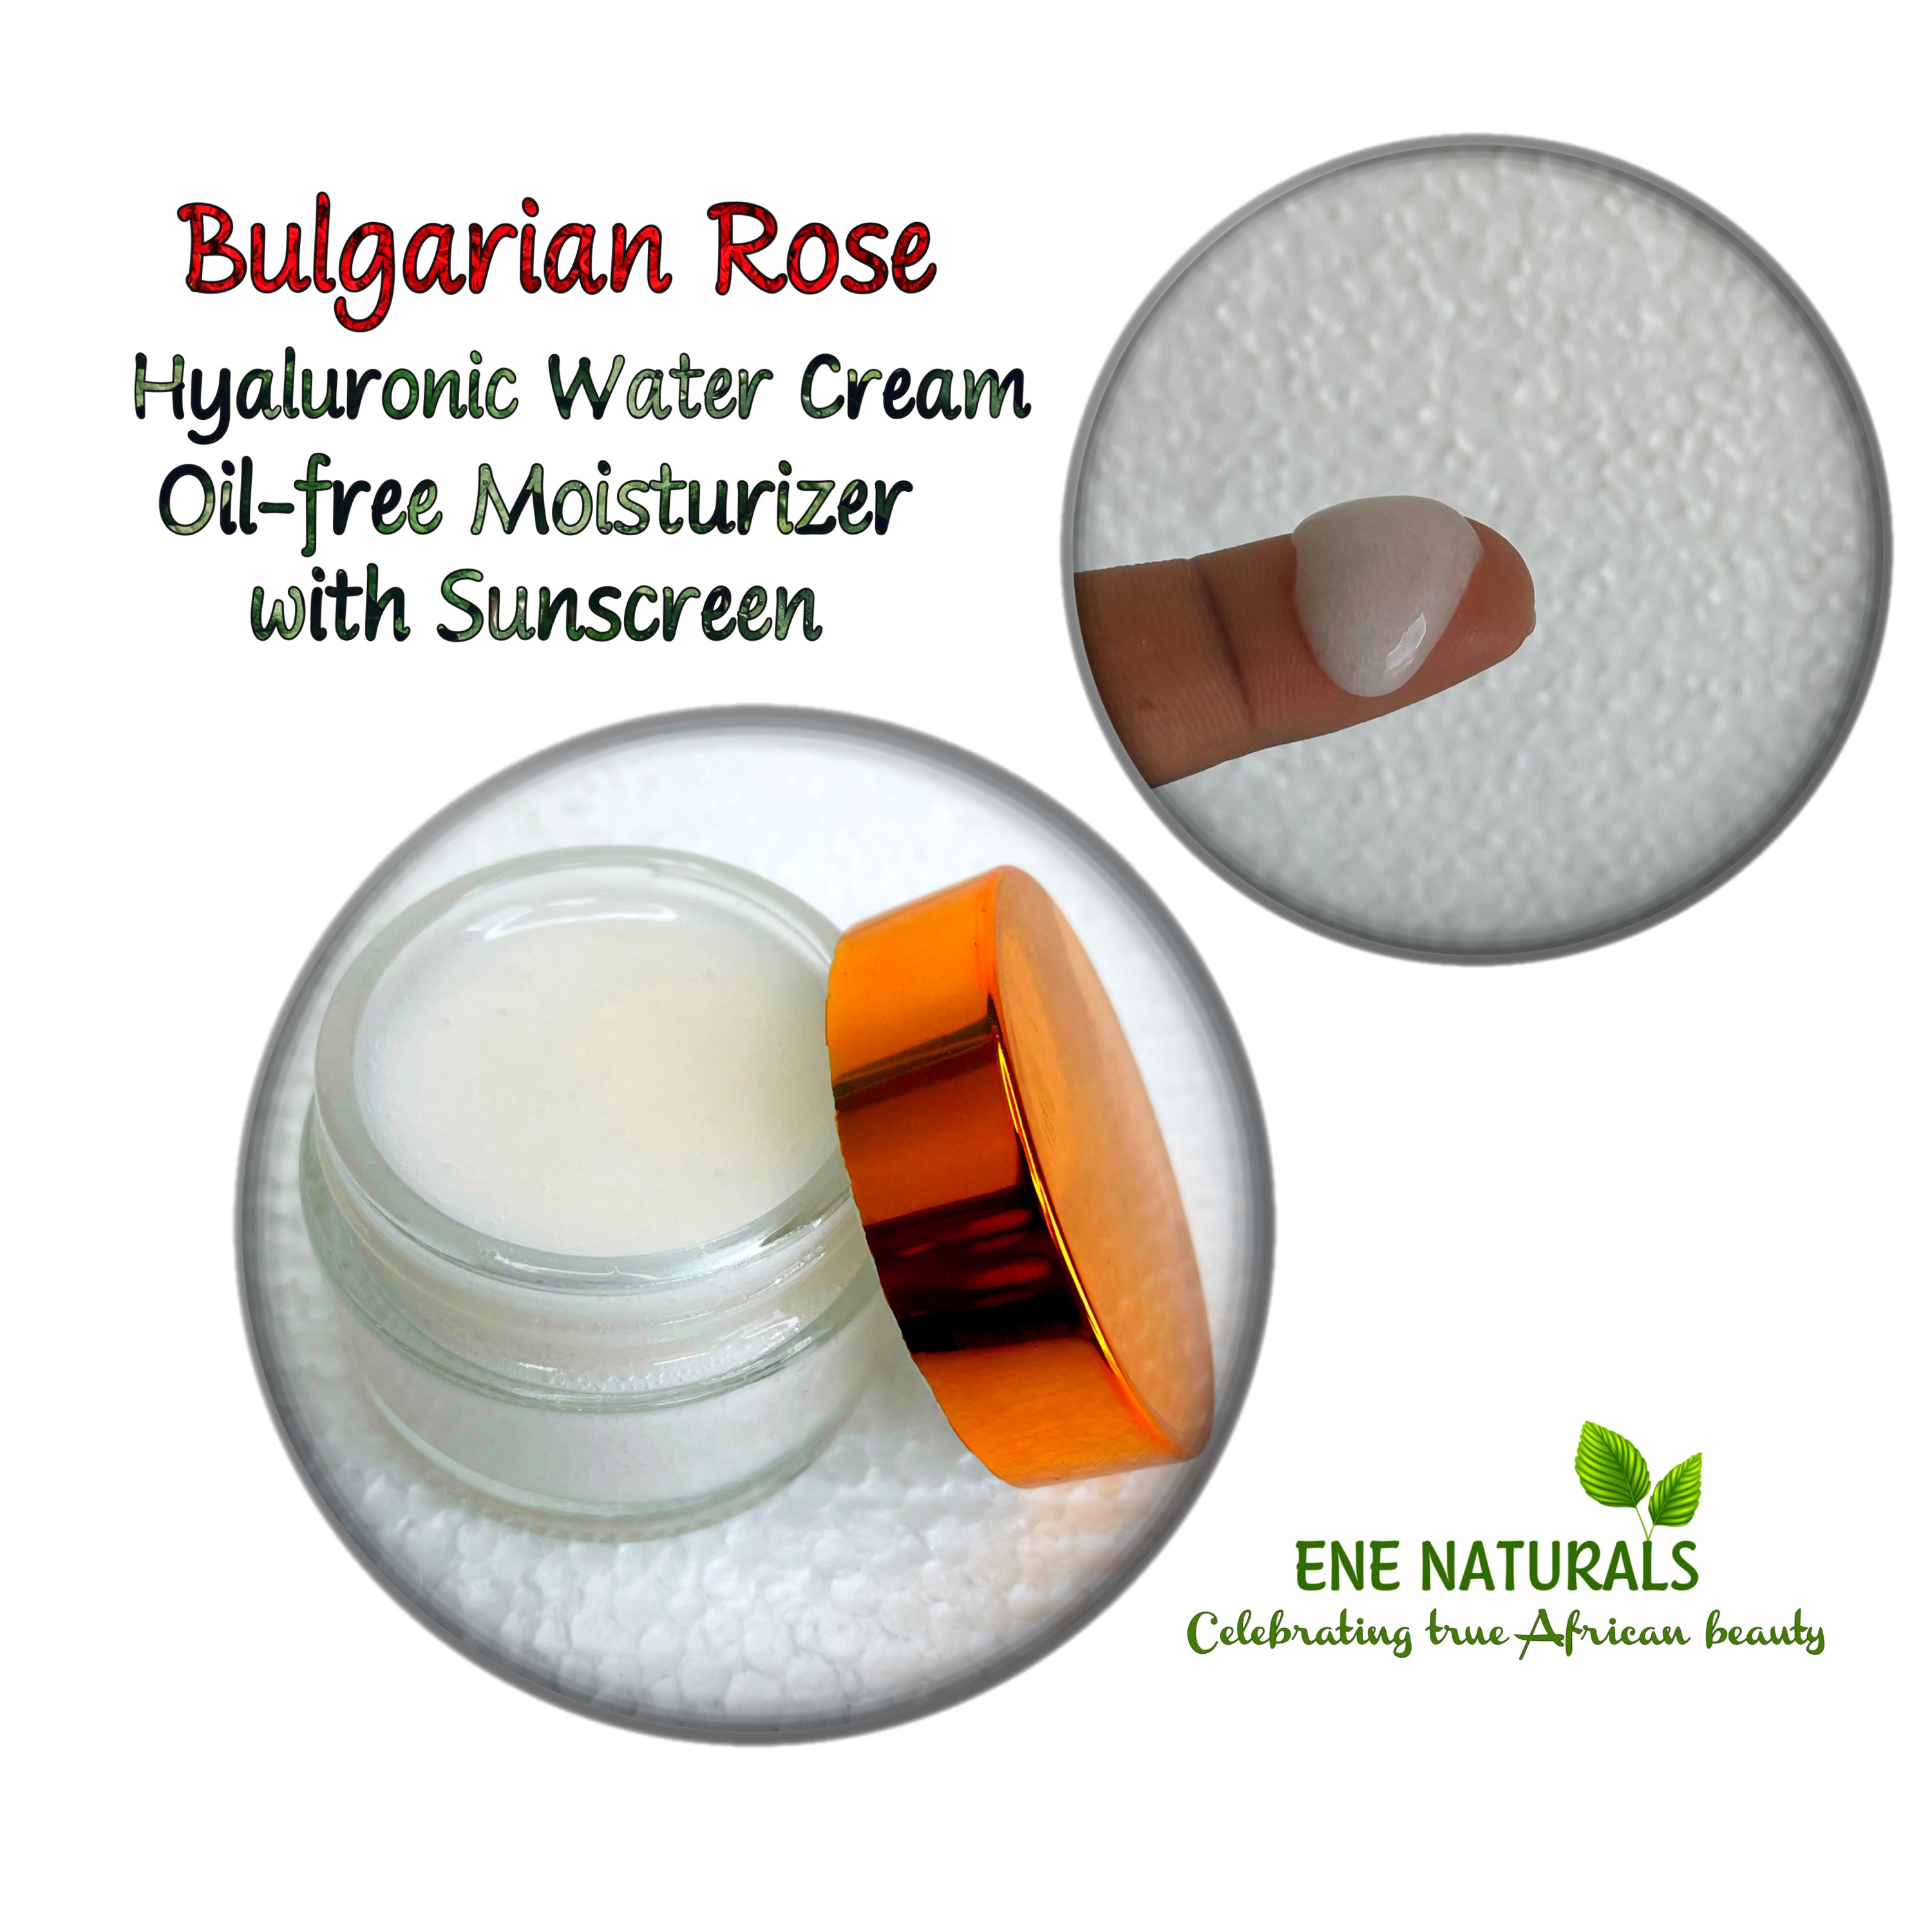 Hyaluronic water cream